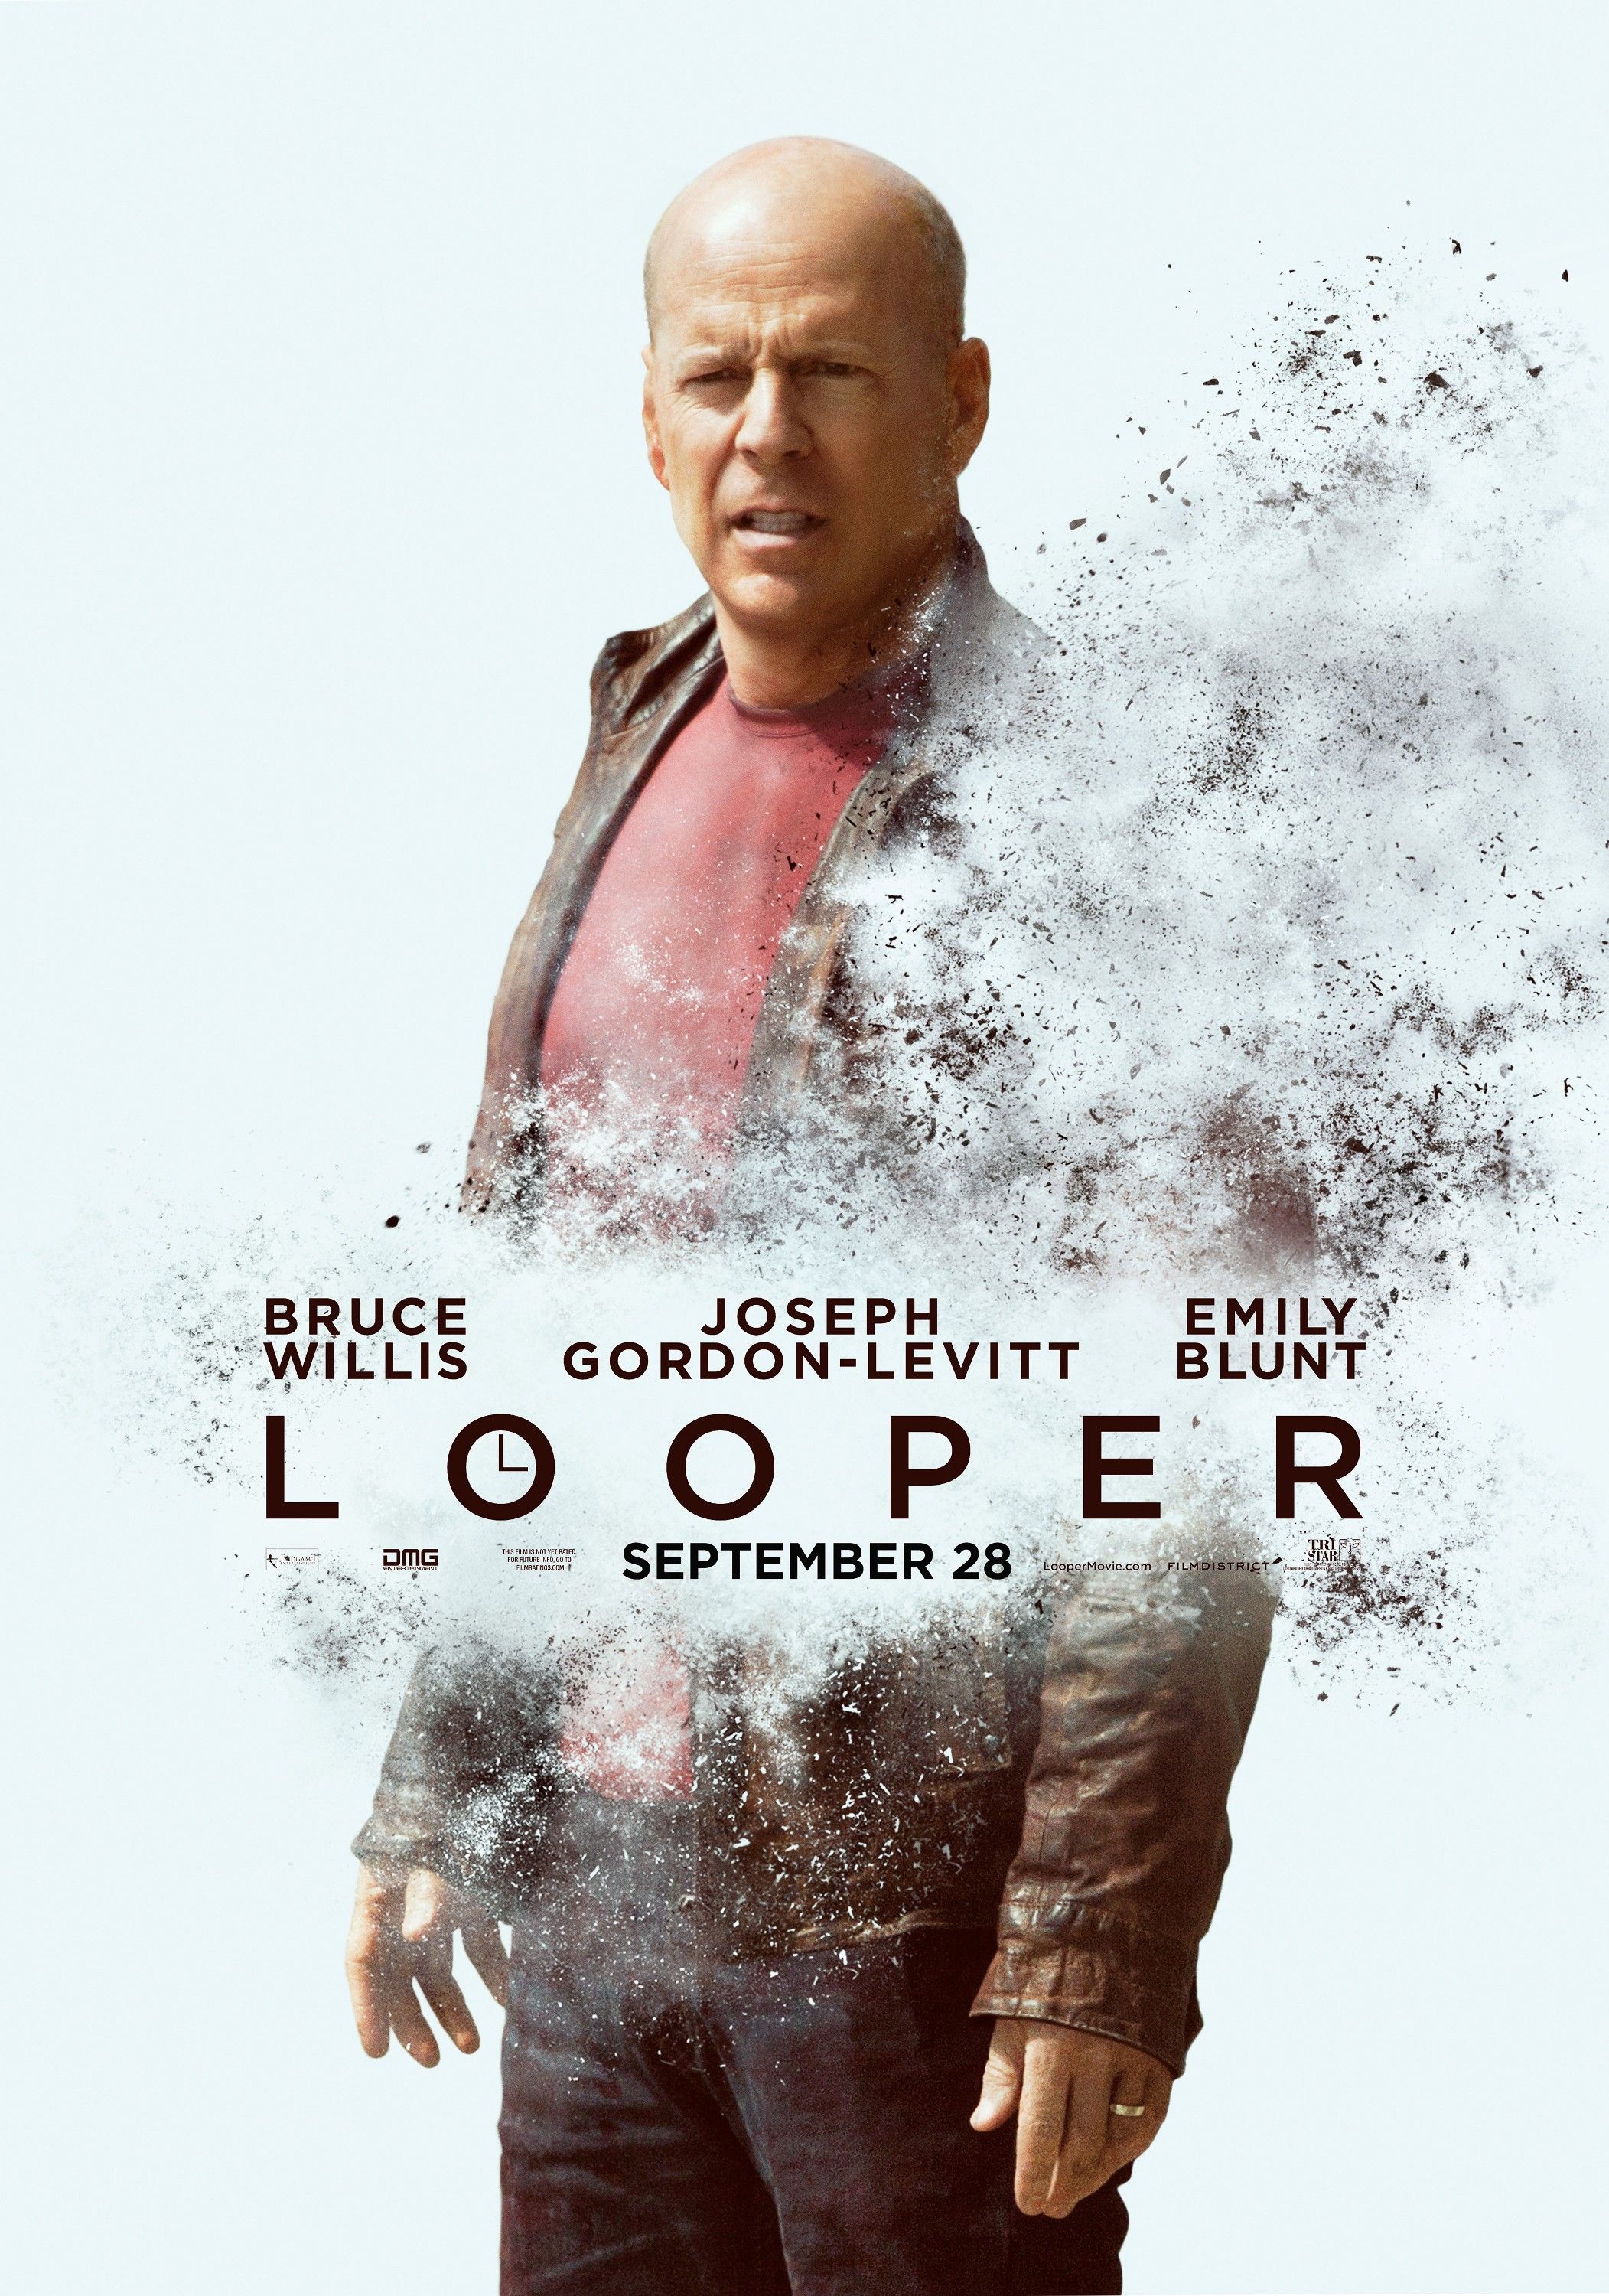 Looper Bruce Willis Character Poster